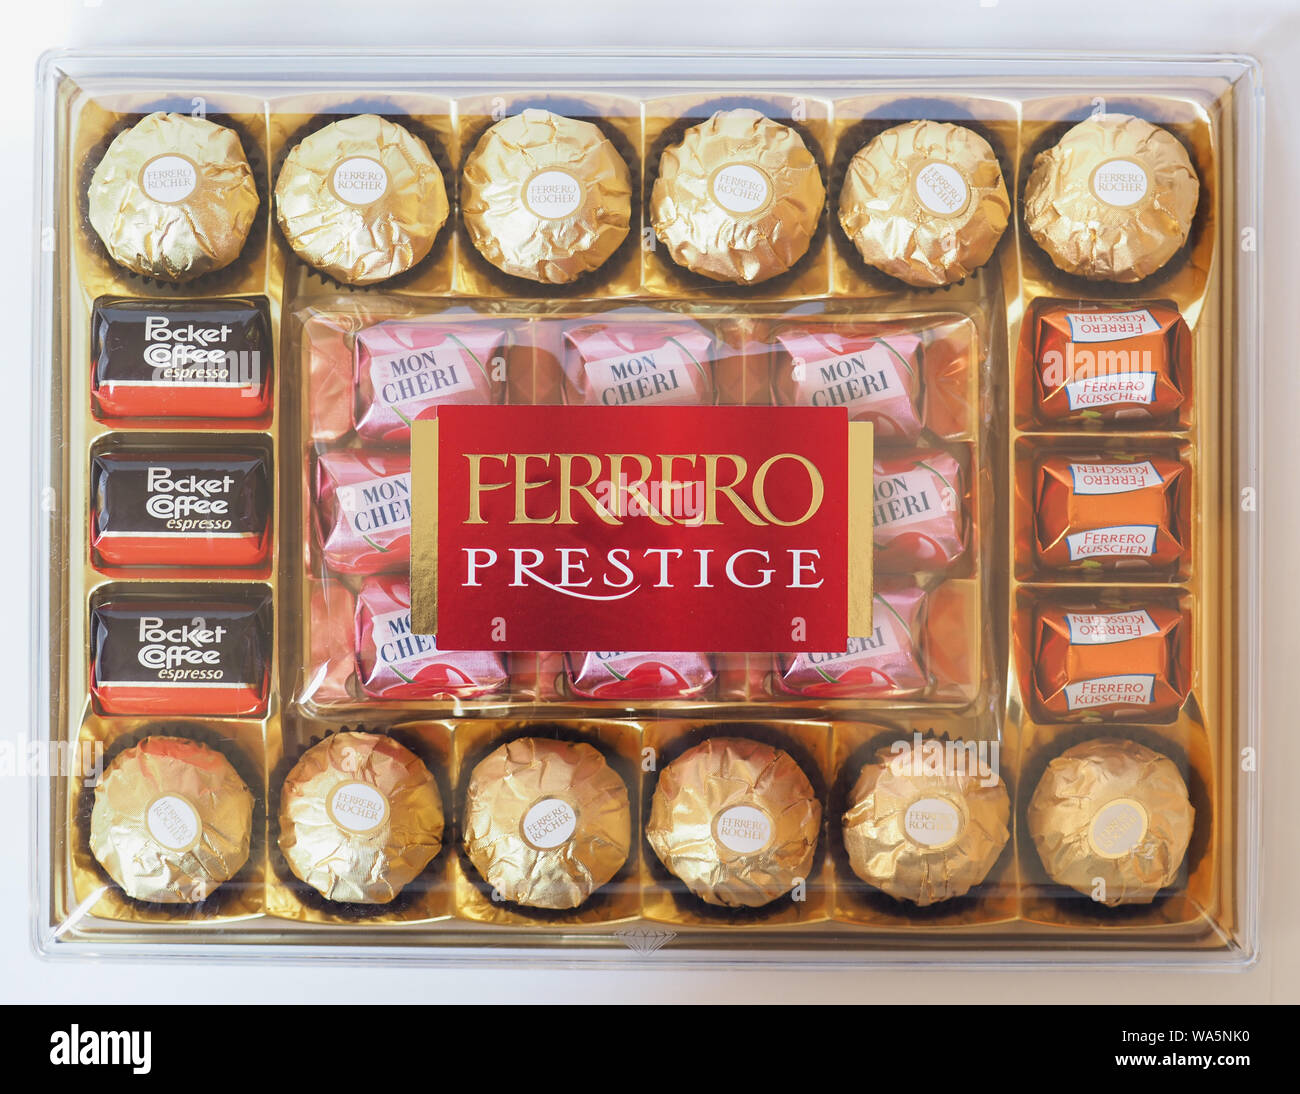 ALBA, ITALY - CIRCA AUGUST 2019: Ferrero prestige chocolate Pocket